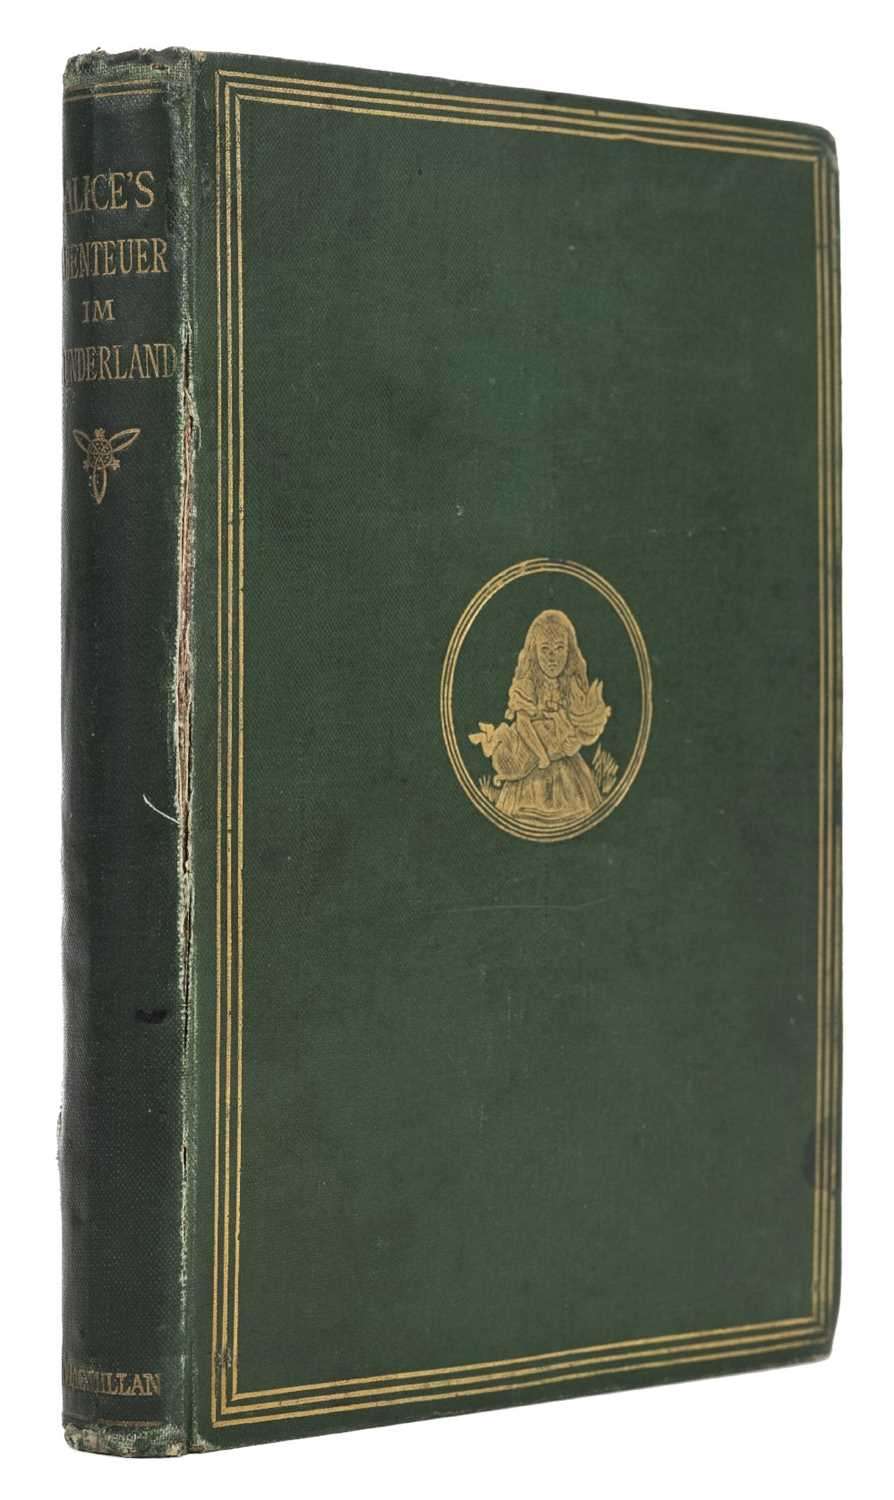 Lot 563 - Dodgson, Charles Lutwidge, 'Lewis Carroll'